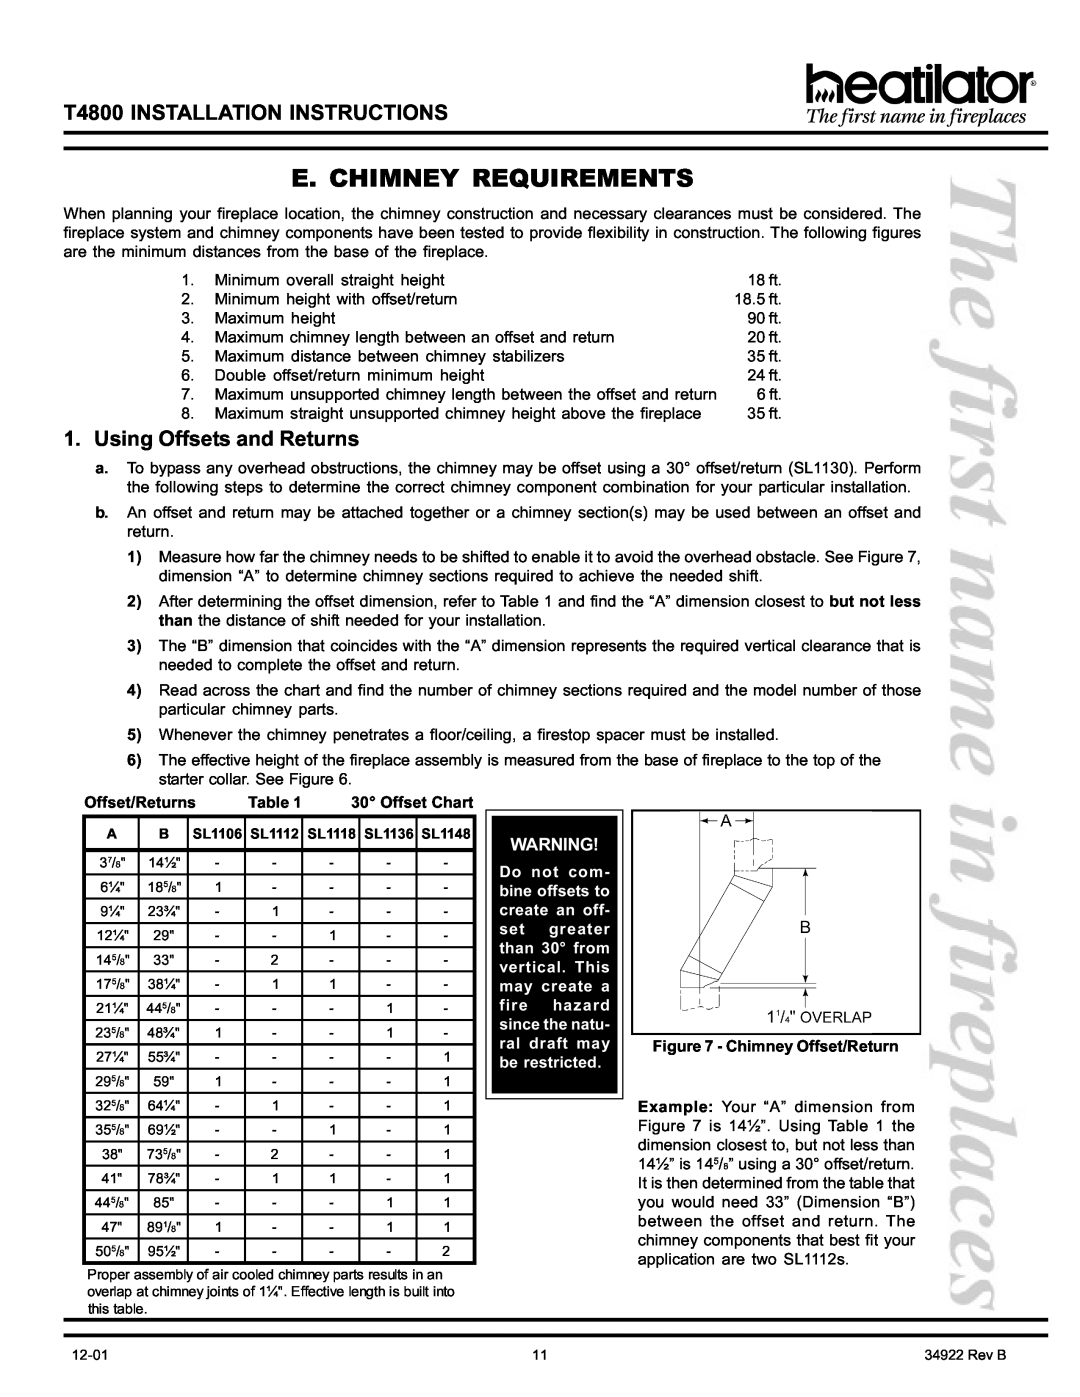 Heatiator T4800 E. Chimney Requirements, Using Offsets and Returns, Offset/Returns, Offset Chart, Chimney Offset/Return 